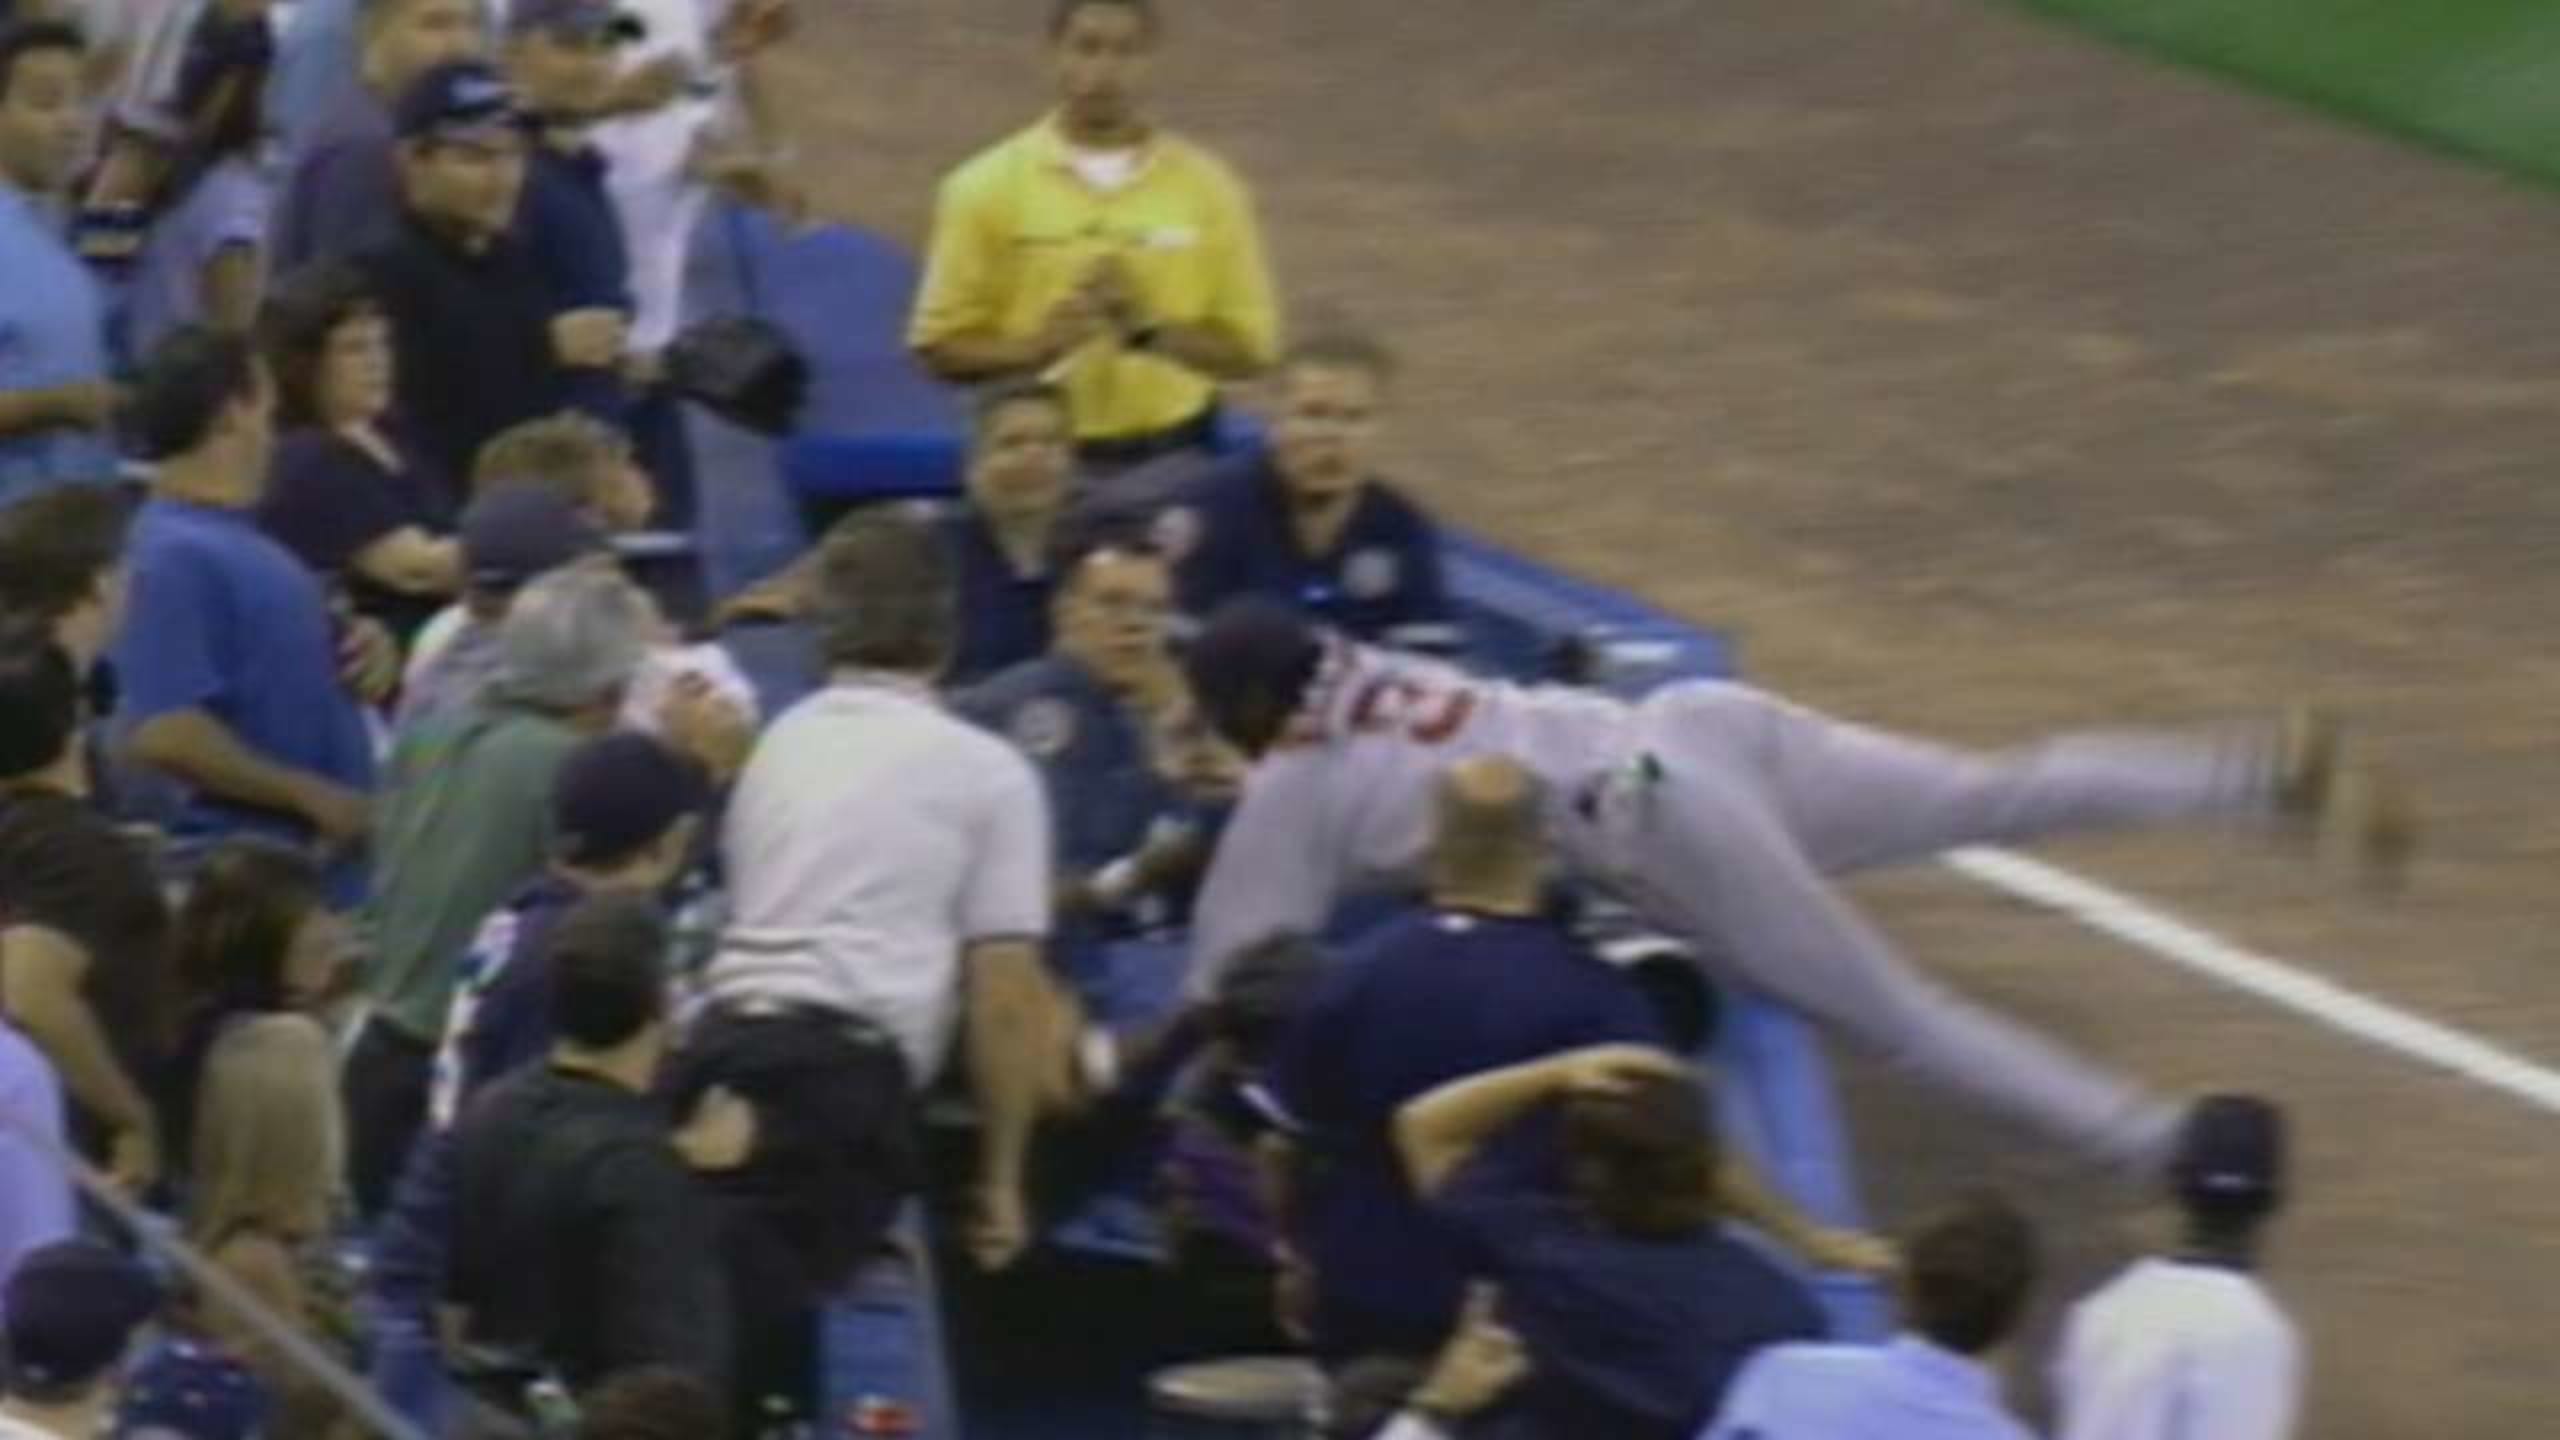 Fan rushes onto field mid-game to hug Derek Jeter